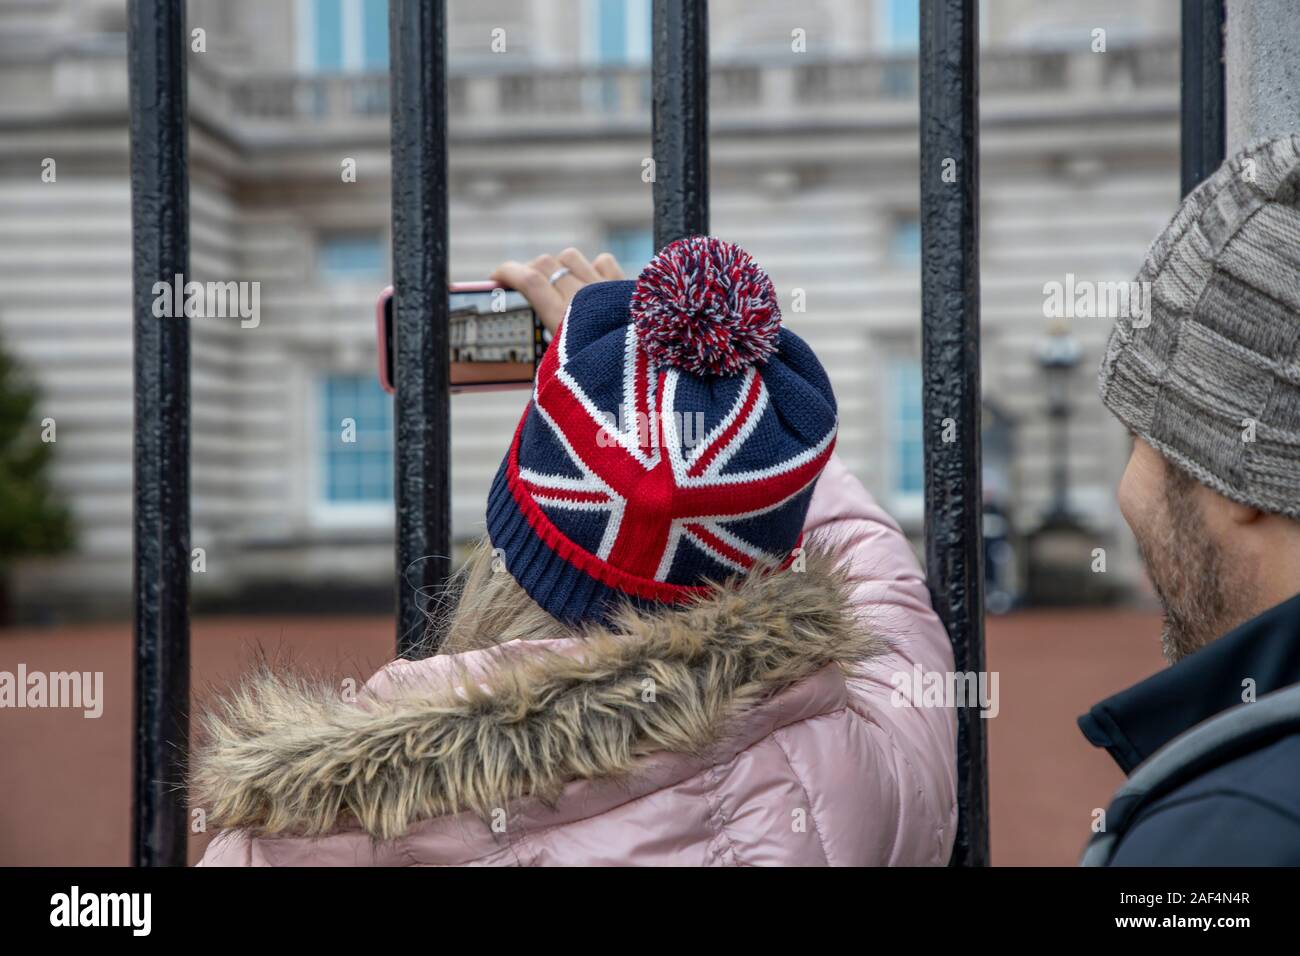 Buckingham Palace, Winter, Touristen, London, Vereinigtes Königreich, Stockfoto